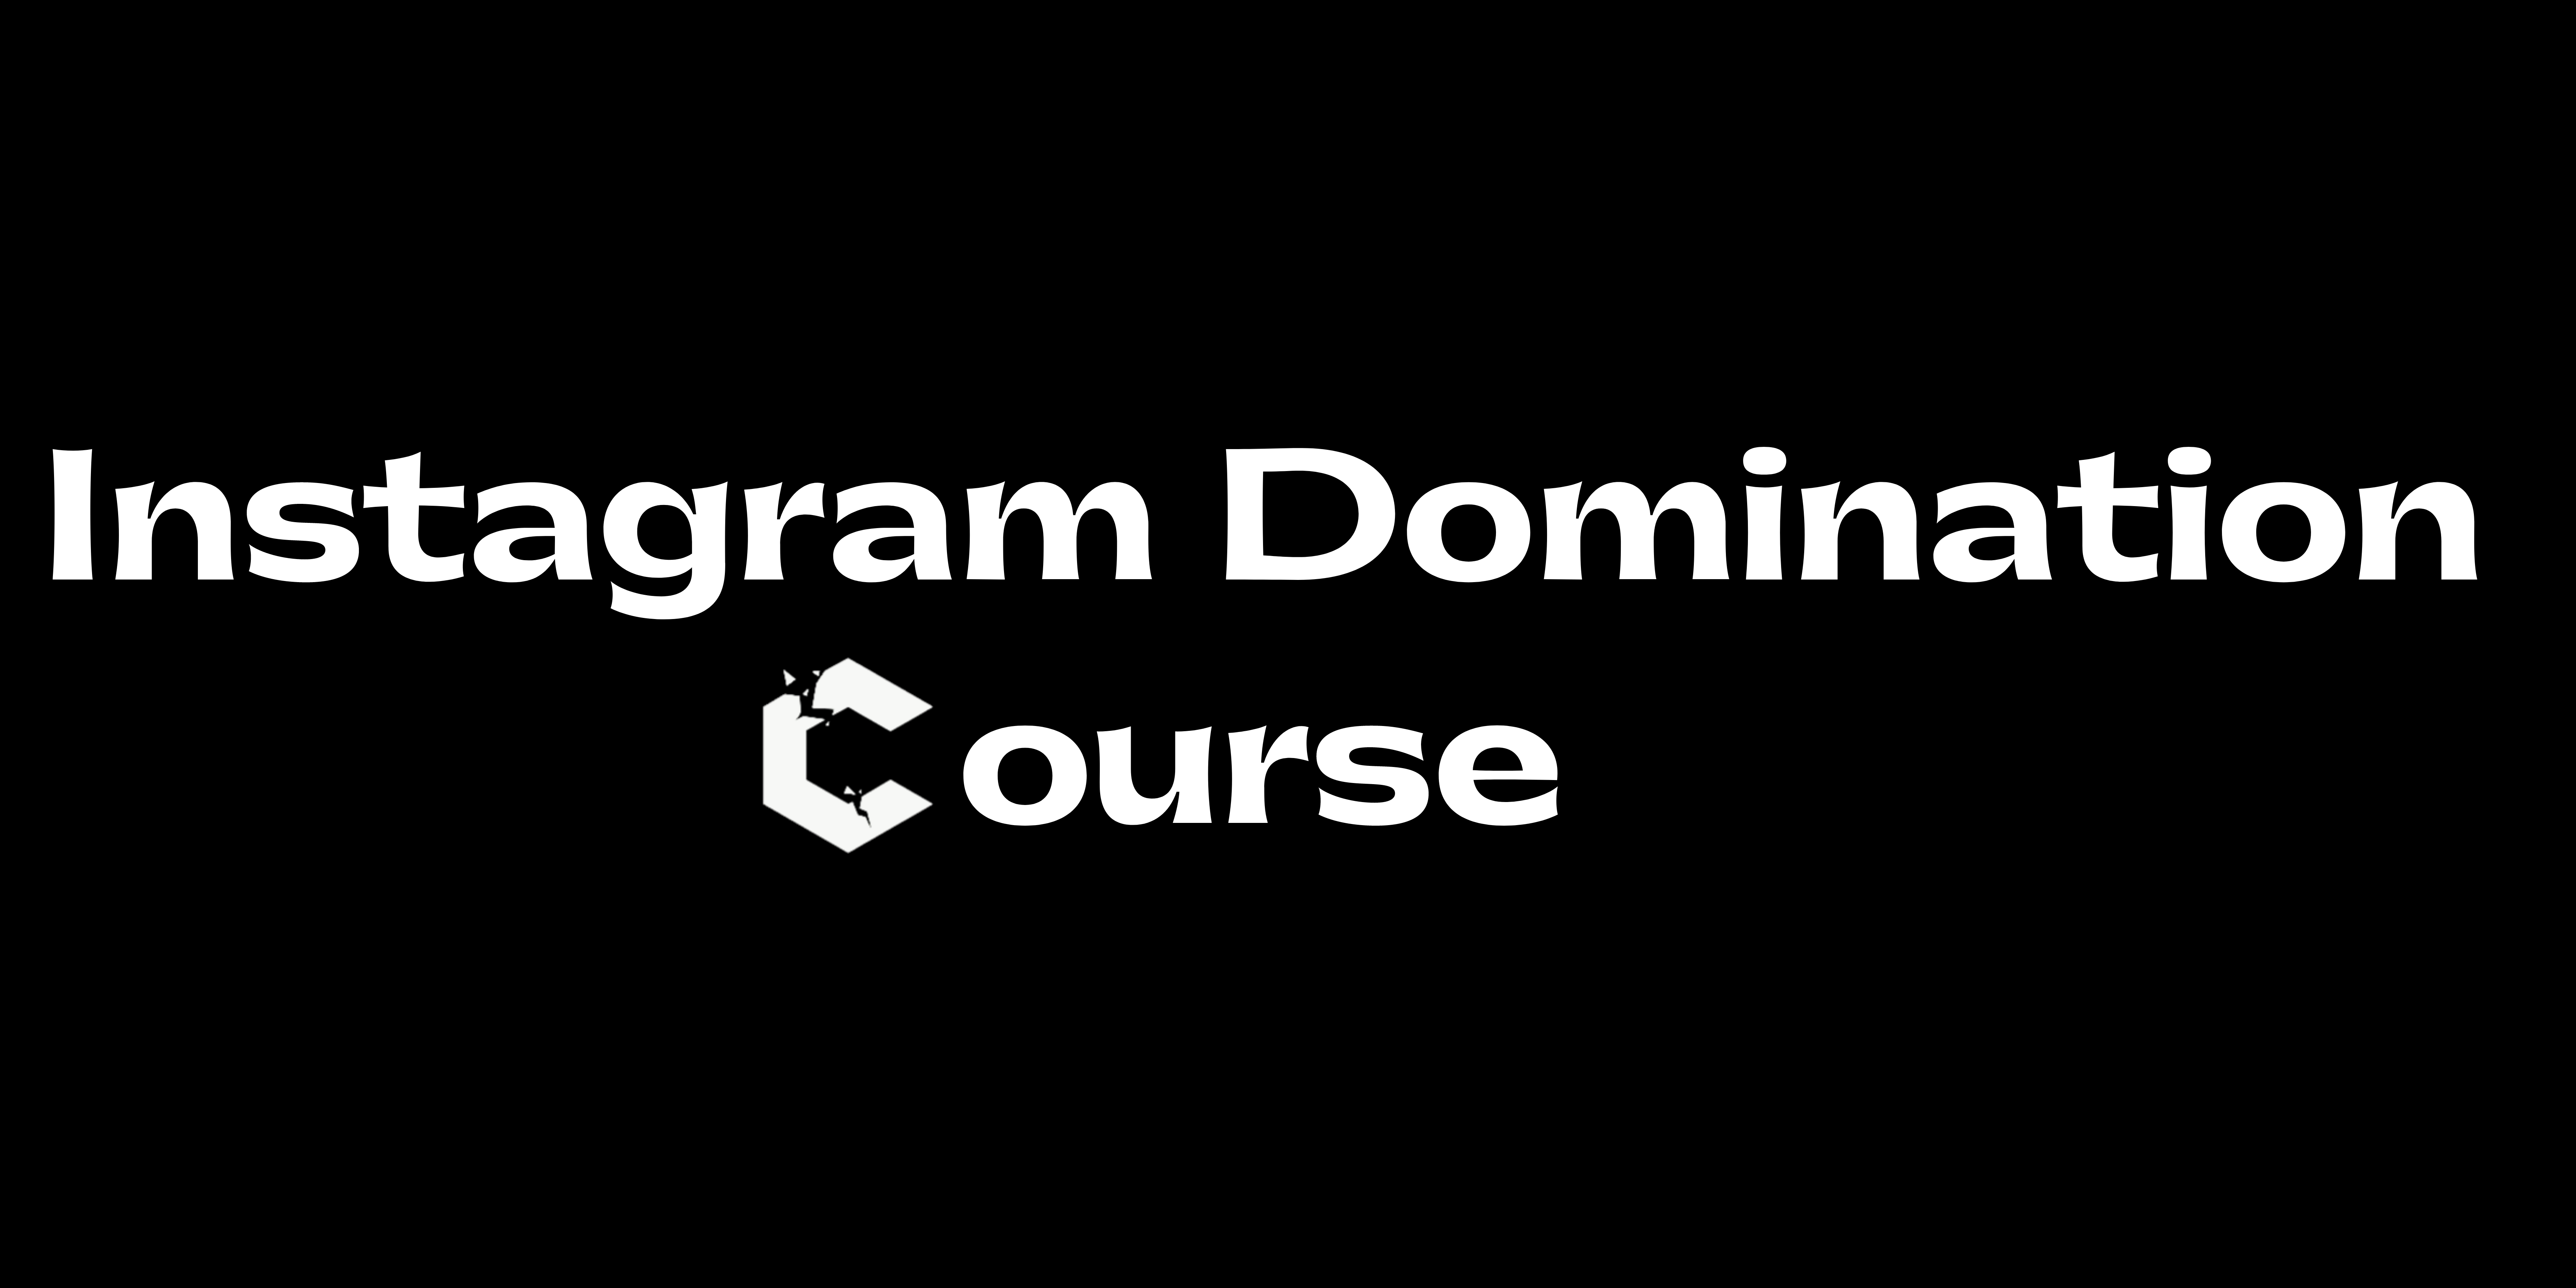 Instagram Domination Course